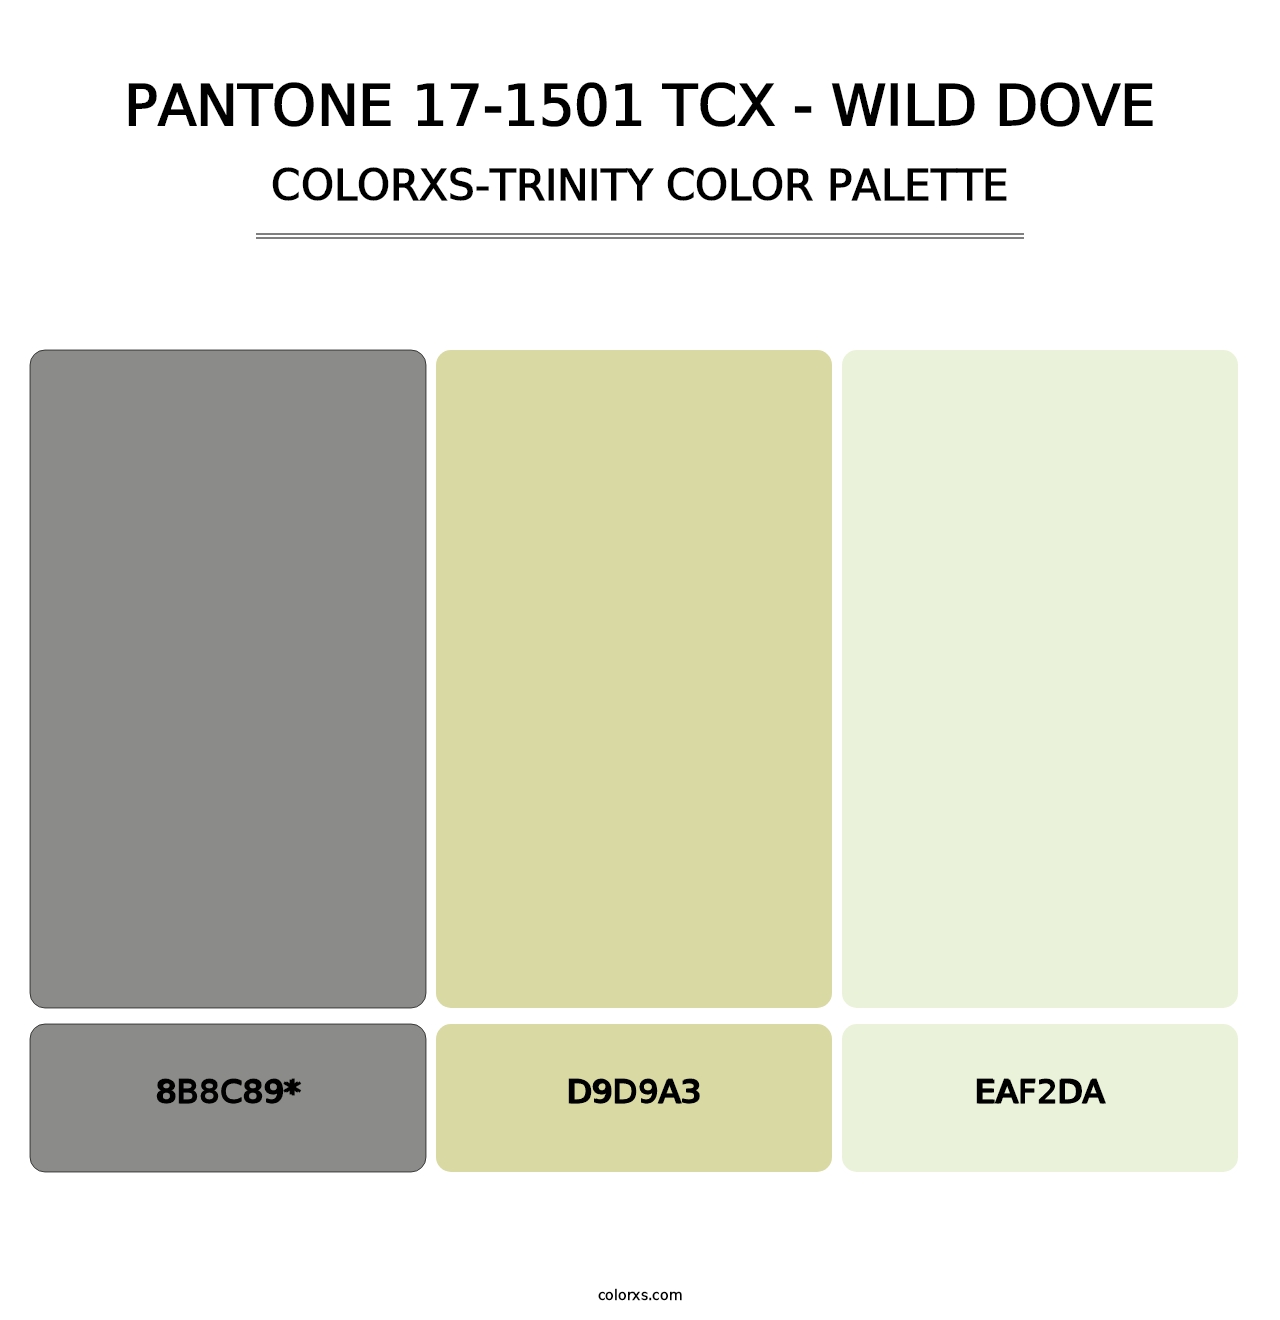 PANTONE 17-1501 TCX - Wild Dove - Colorxs Trinity Palette